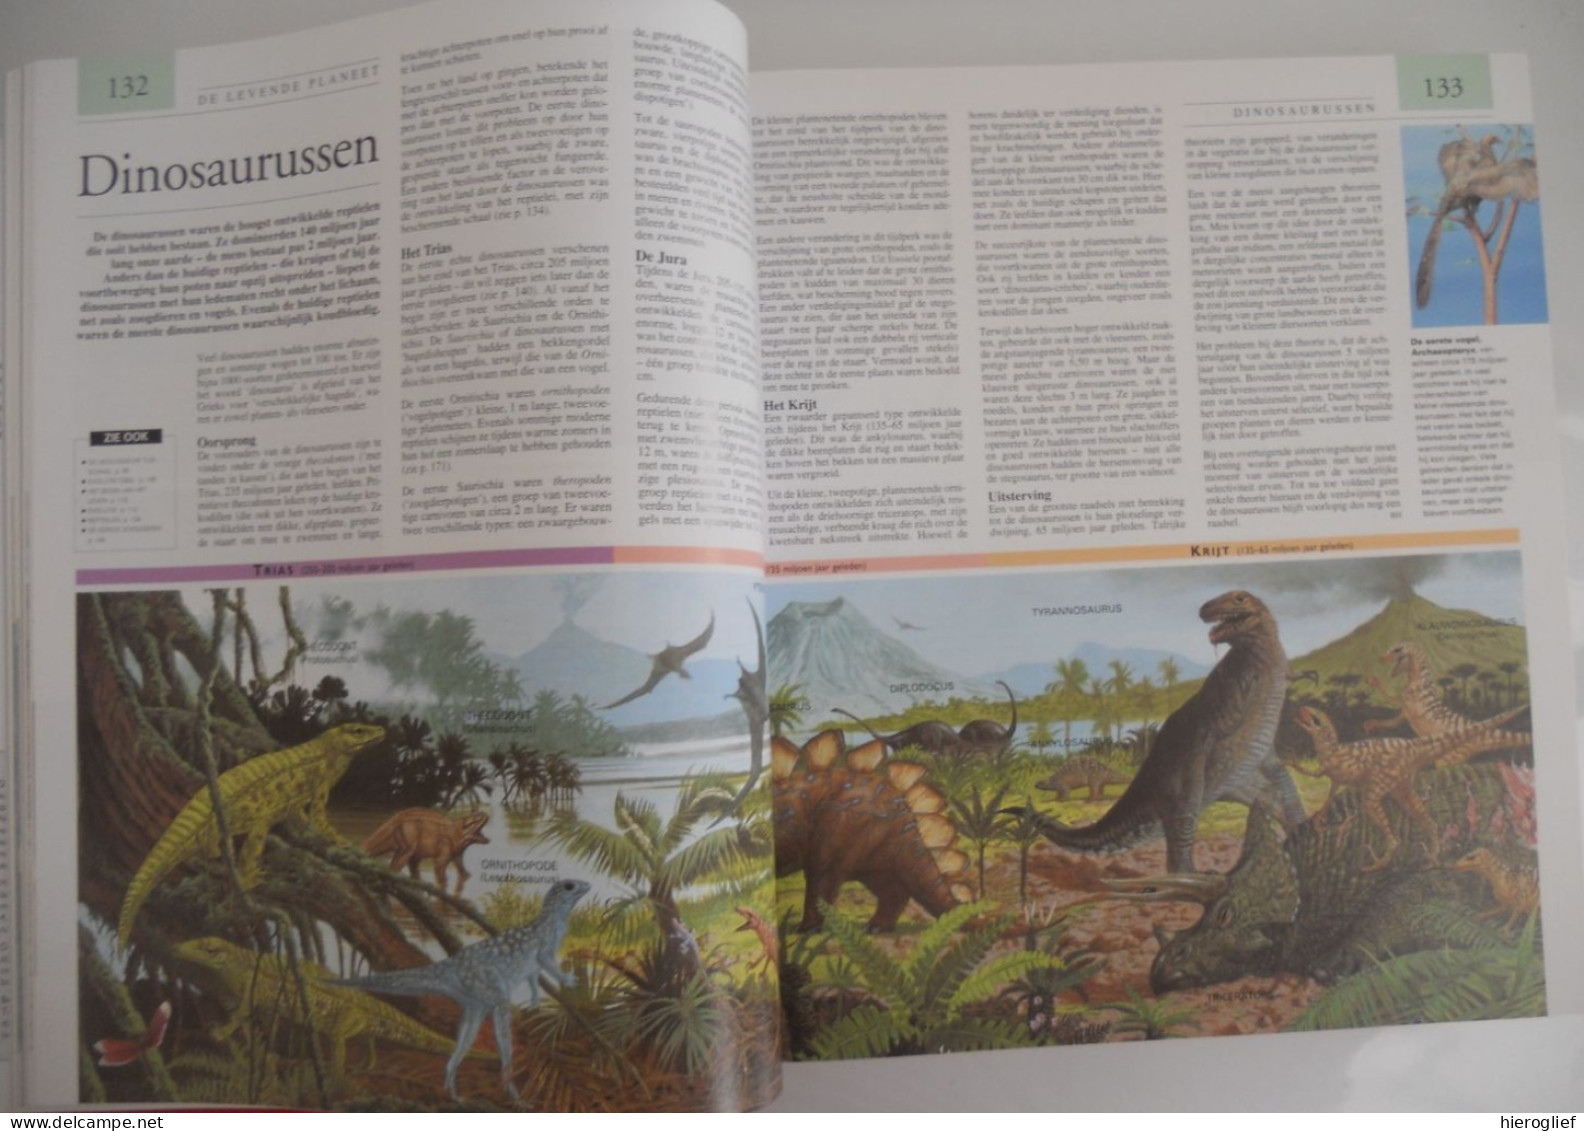 Atrium encyclopedie - originated bij Guiness geschiedenis oorlog kunst fauna flora dans muziek architectuur geografie